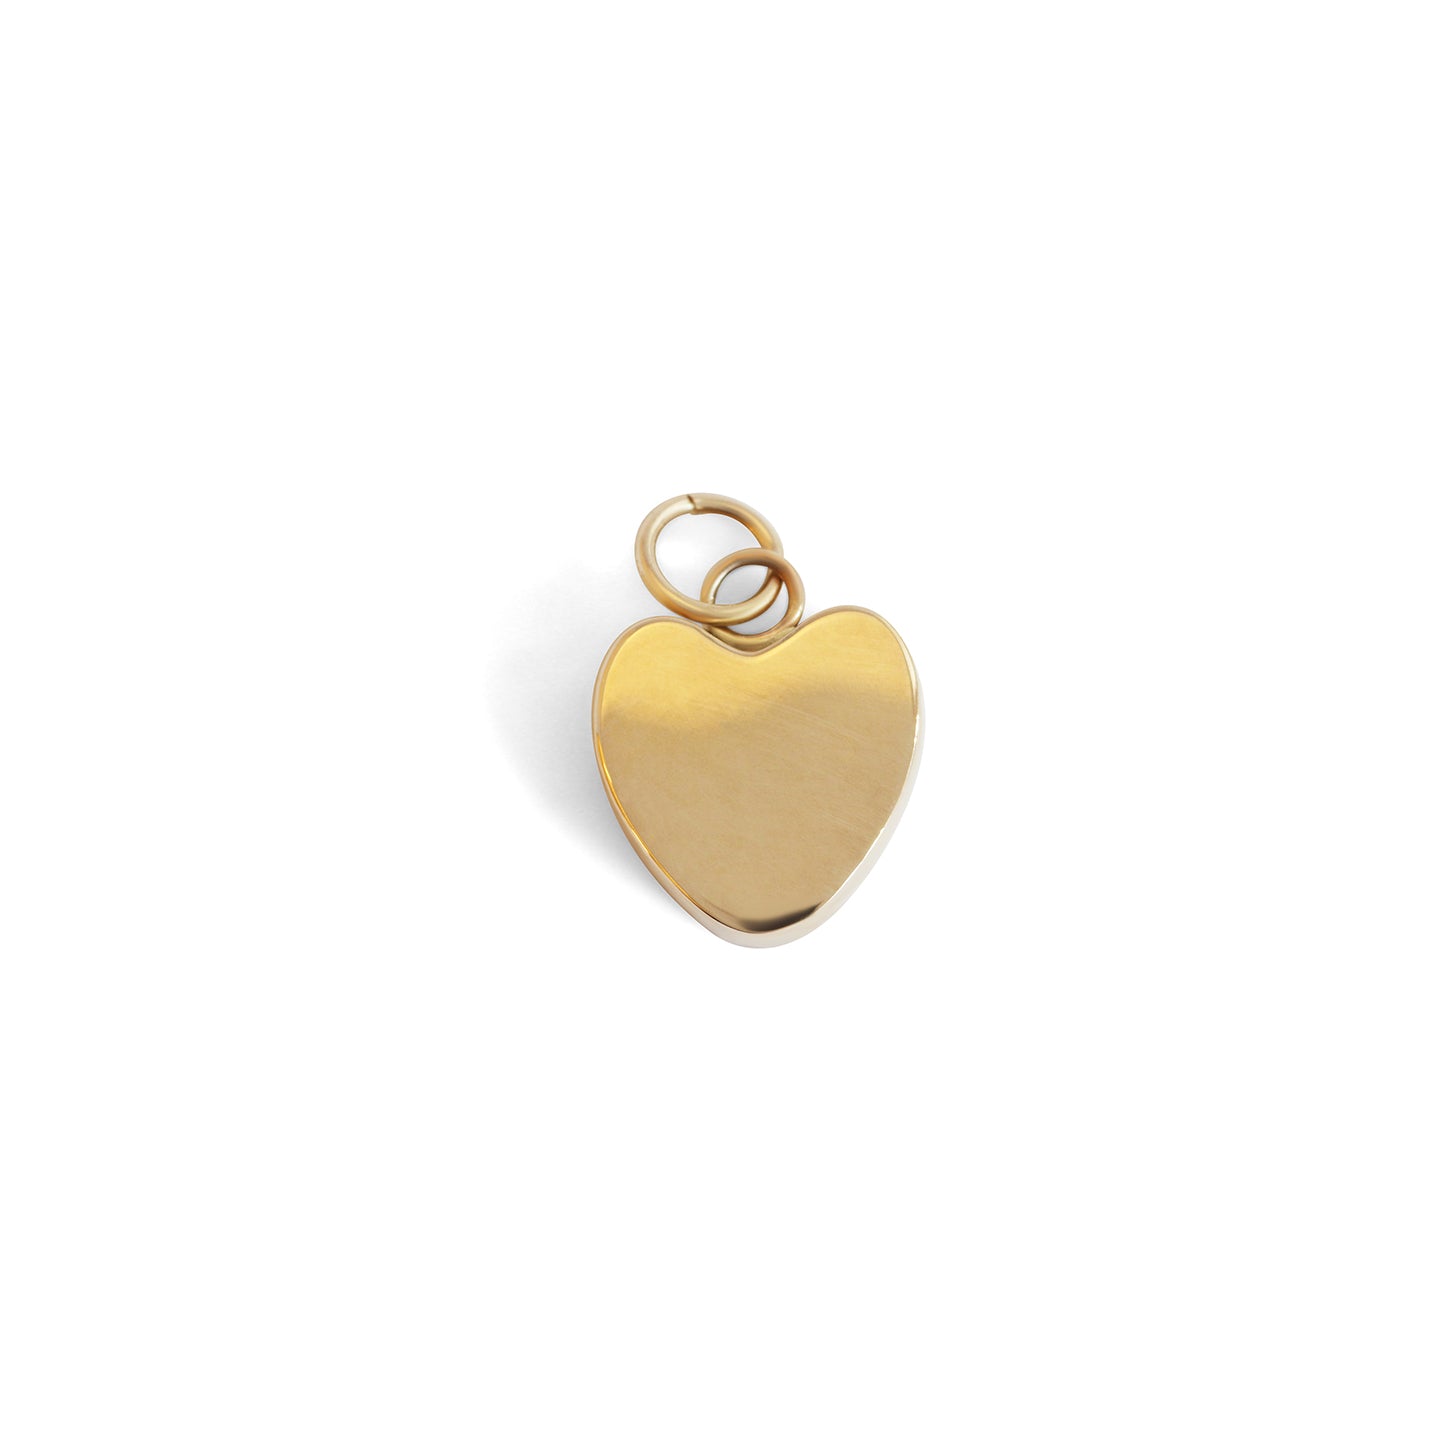 Candy Heart Charm - Goldpoint Studio - Greenpoint, Brooklyn - Fine Jewelry